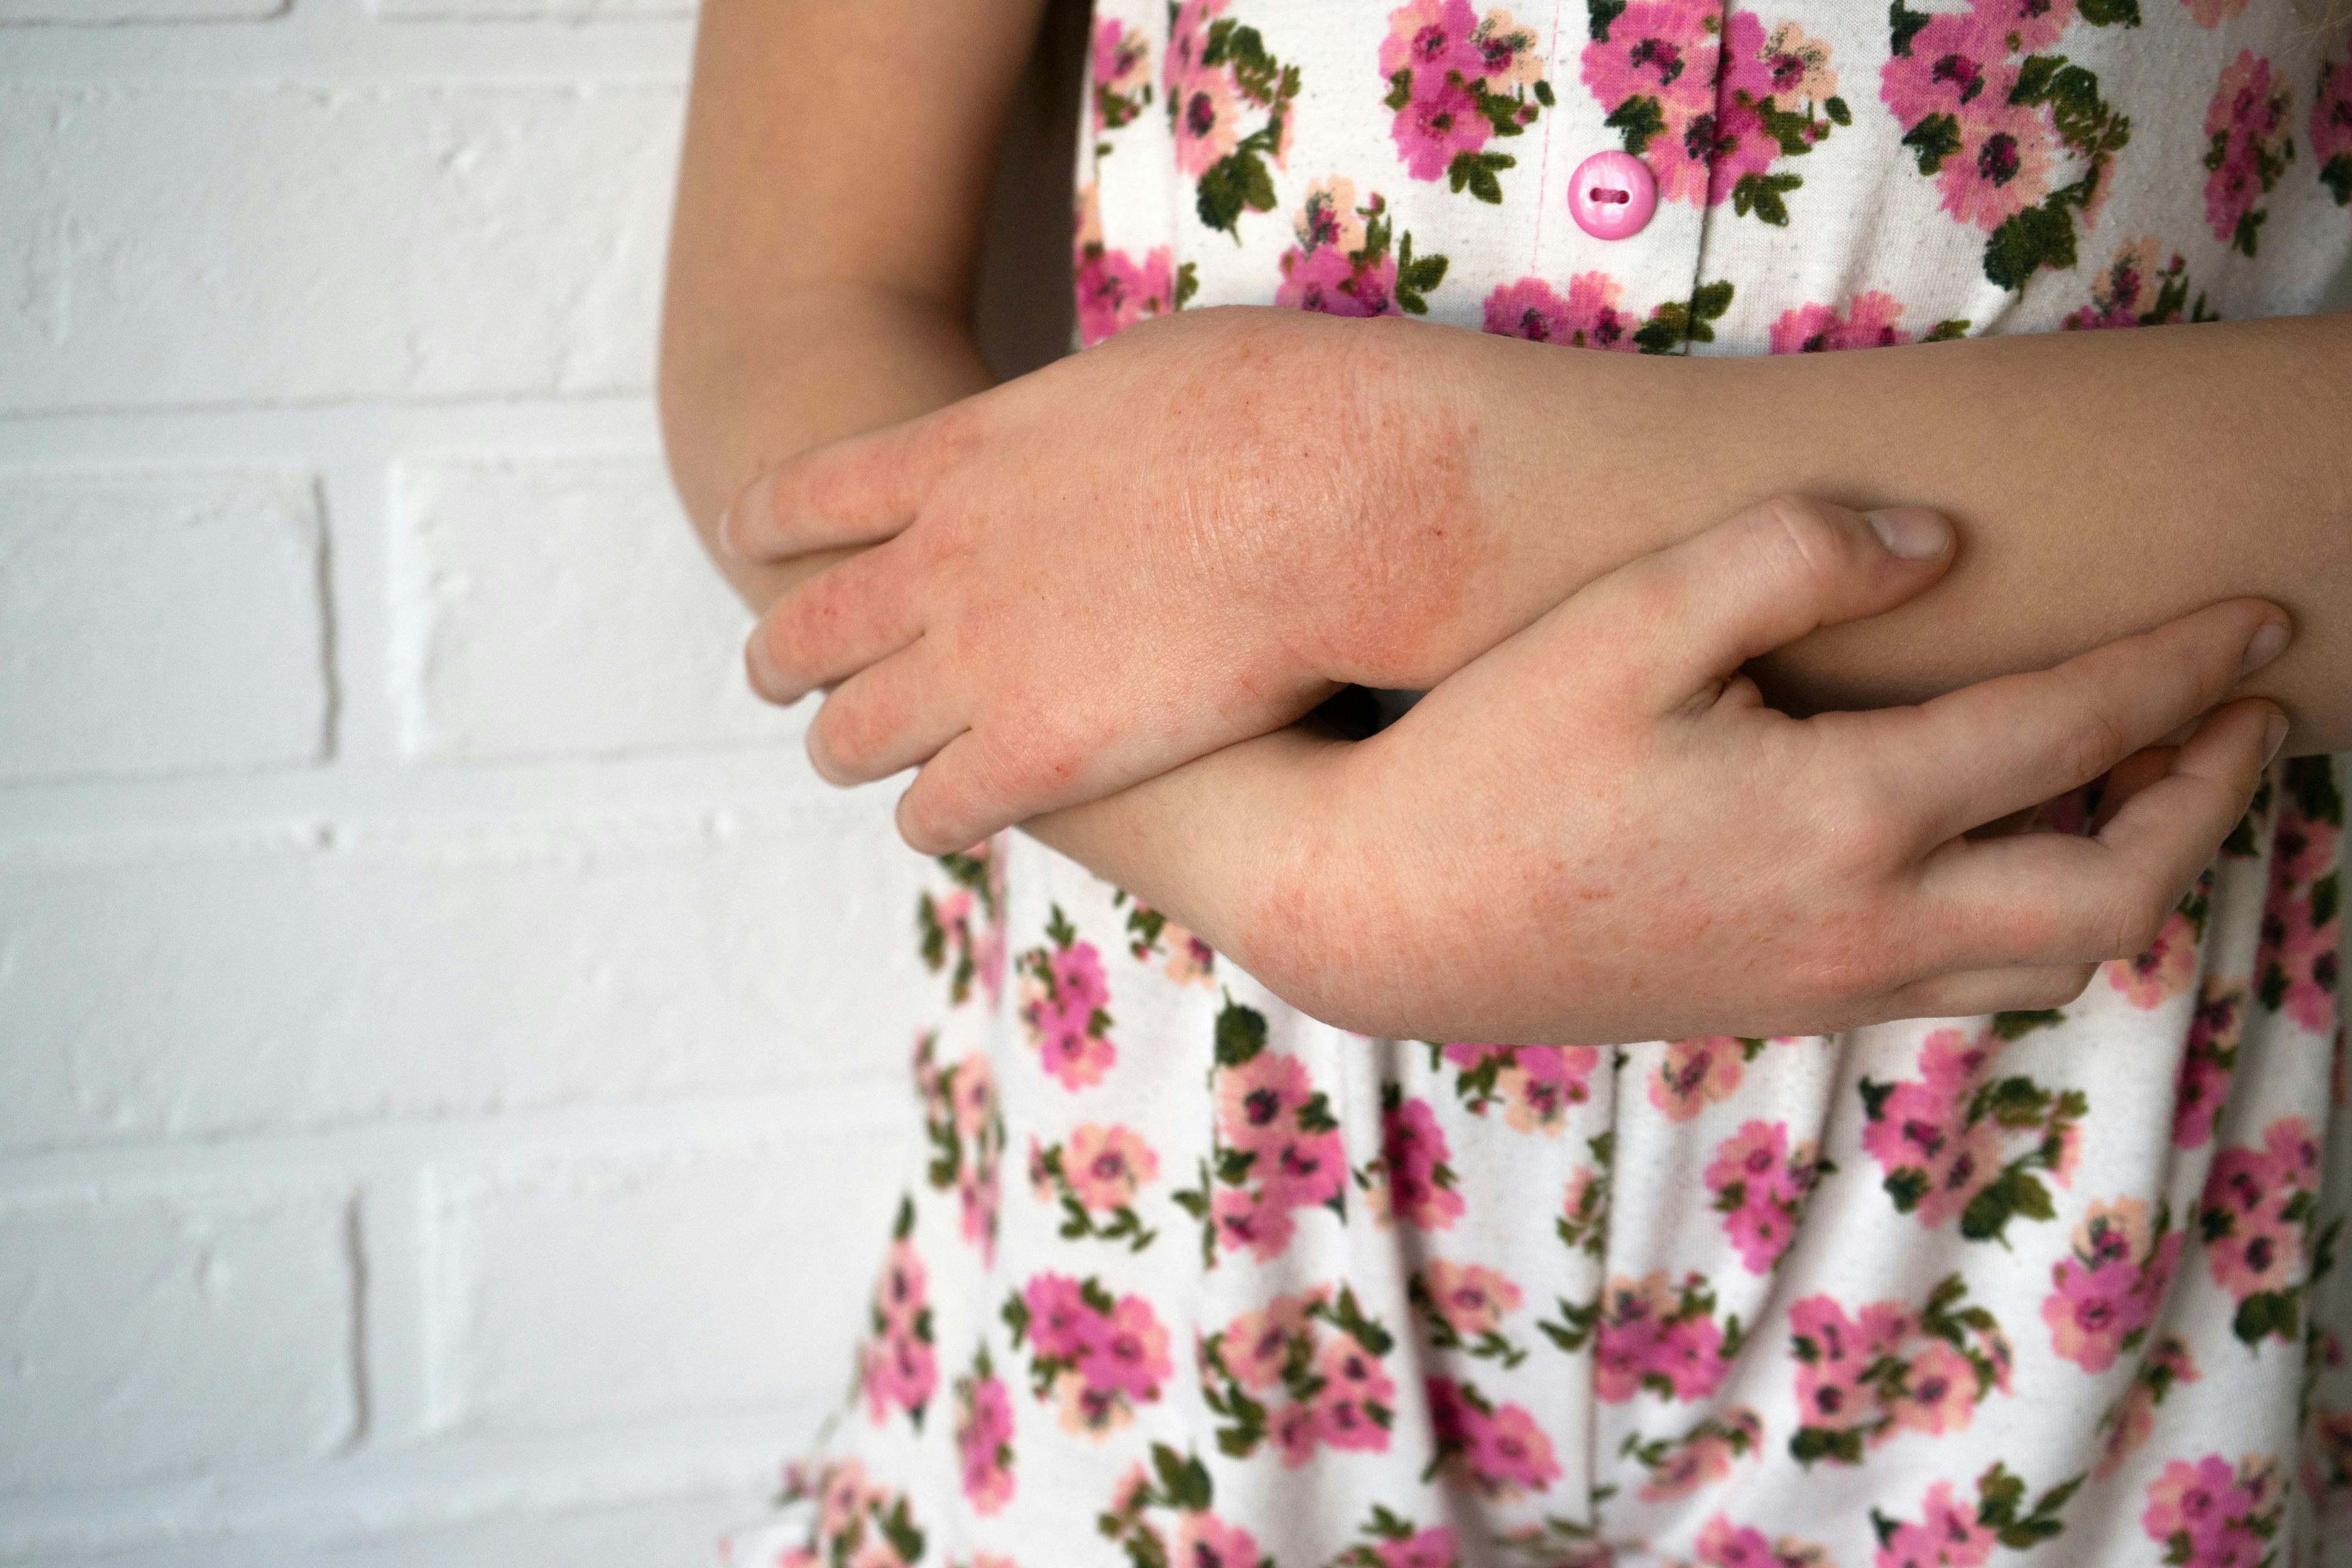 Allergic Contact Dermatitis Common Among Children Exposed to Cobalt